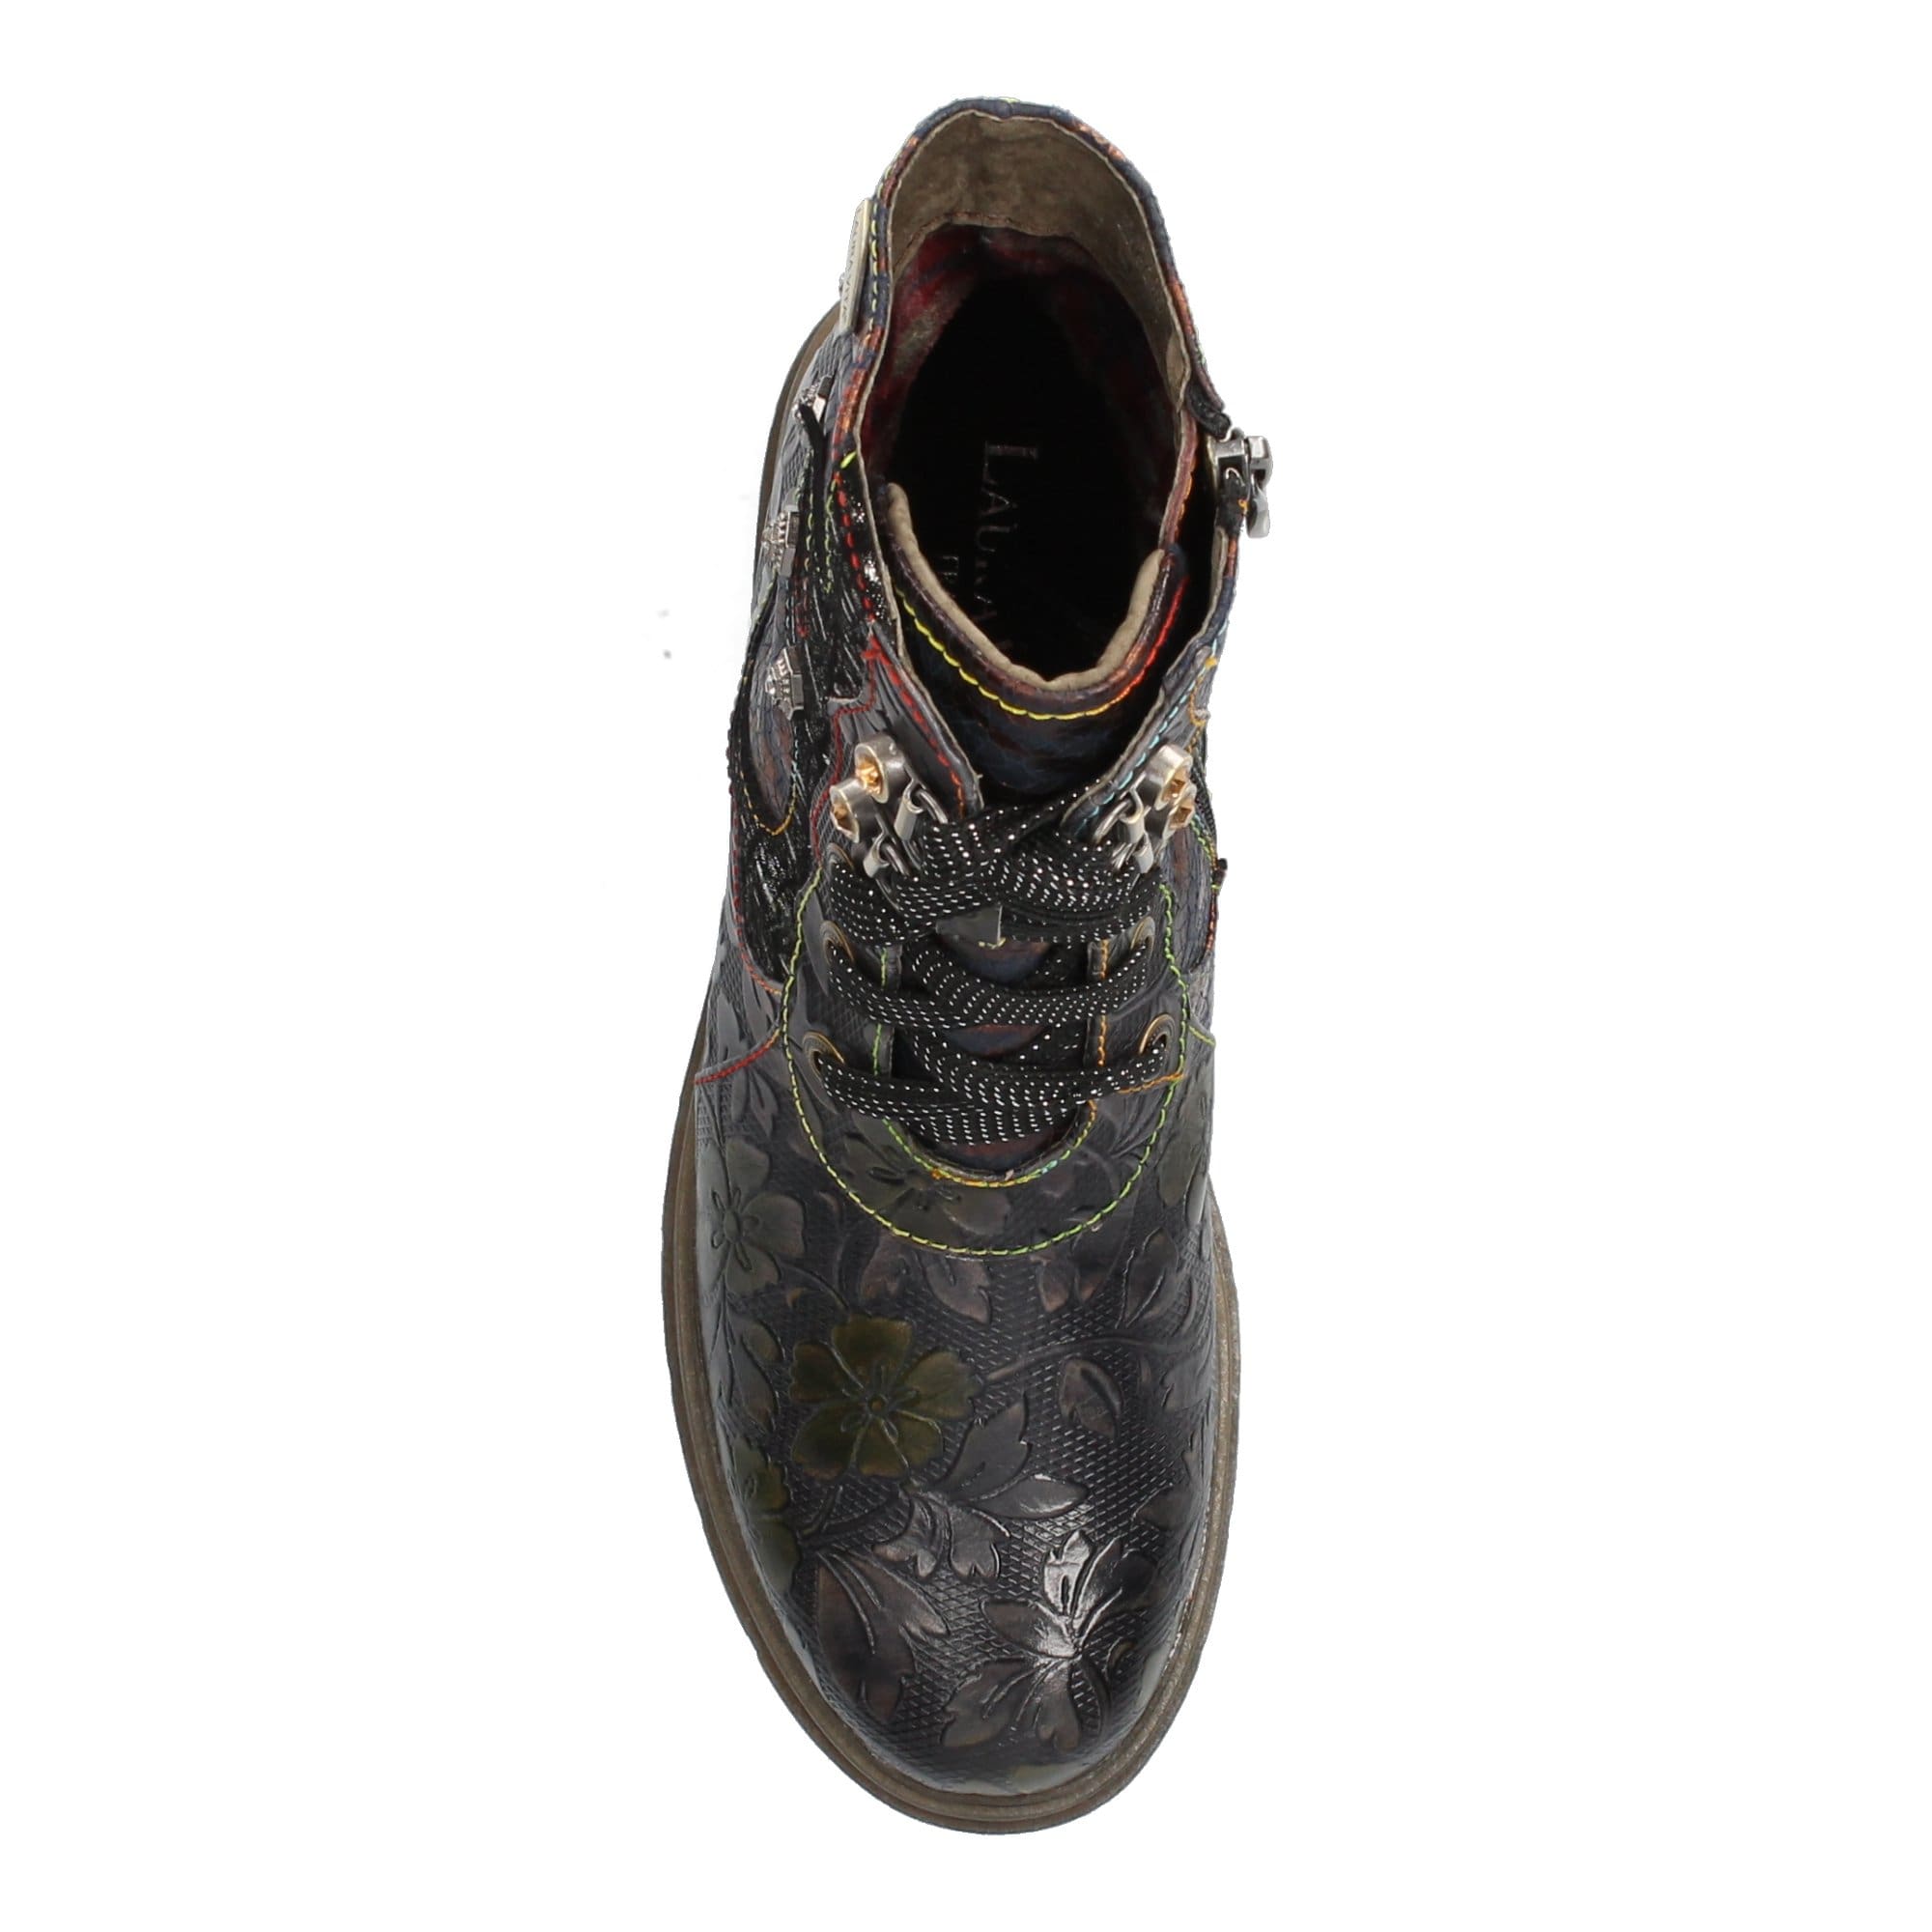 Chaussure KAELAO 03 - Boots